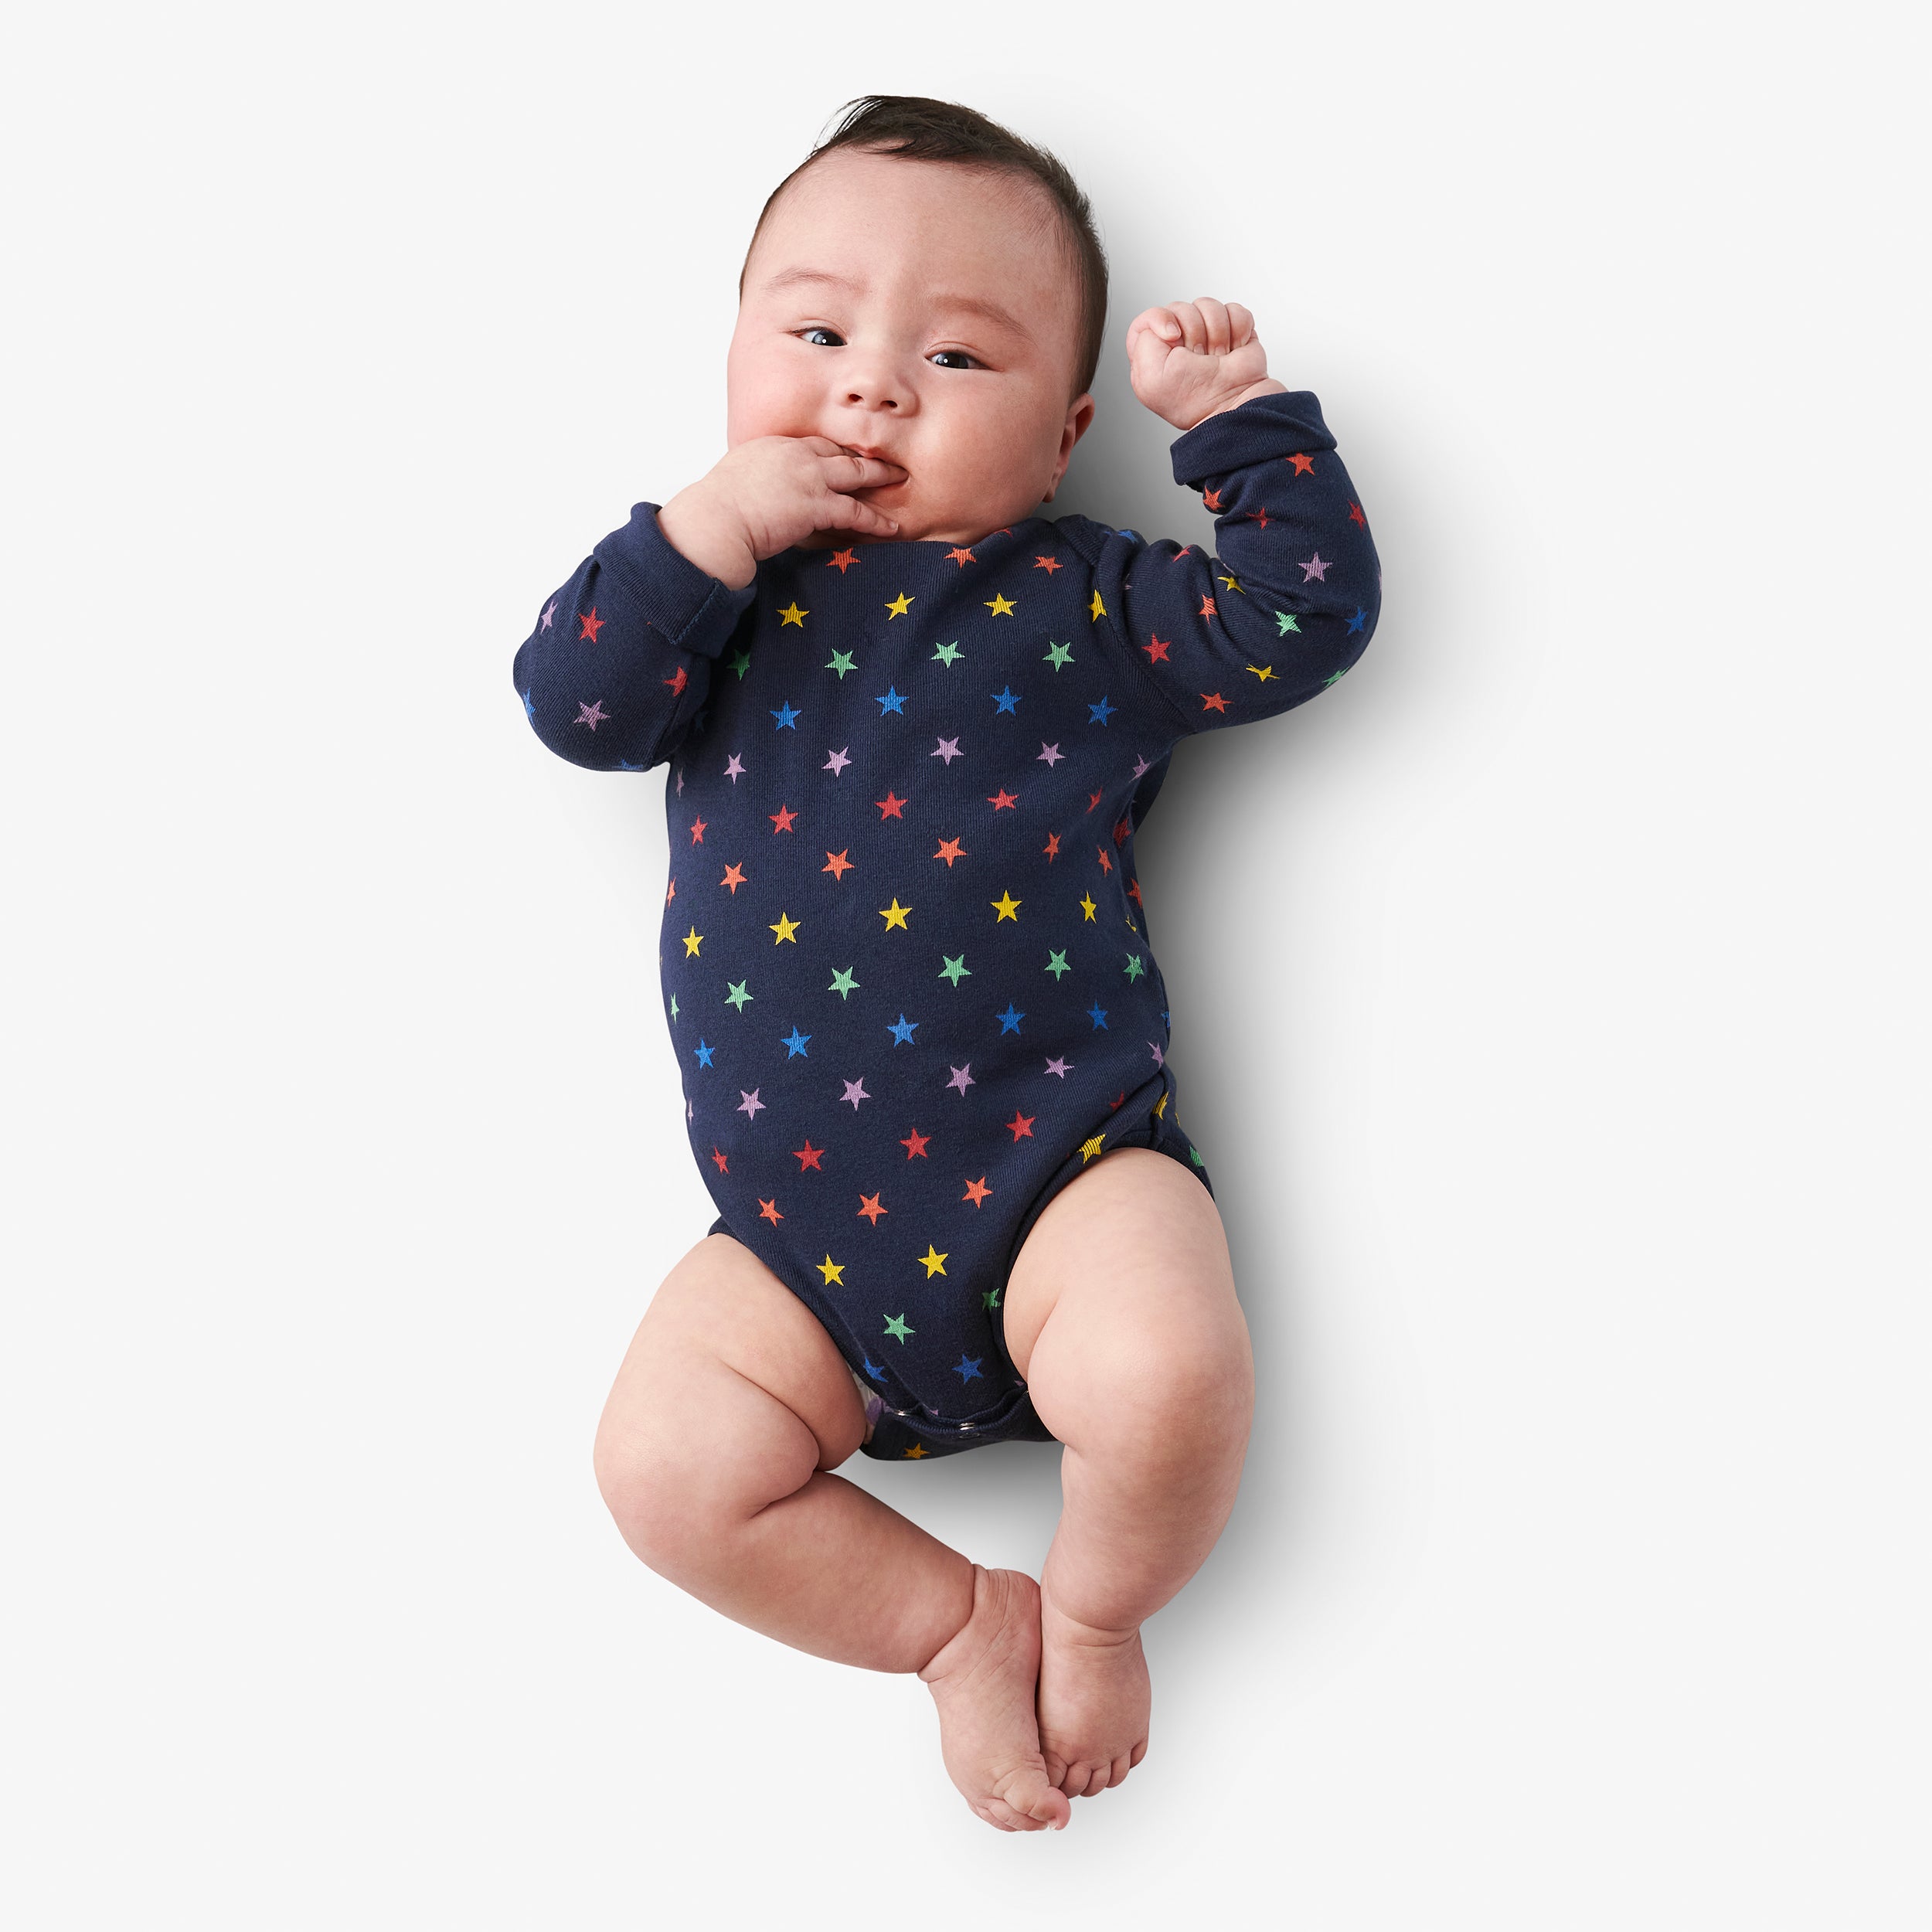 Baby body suit onesie Royalty Free Vector Image